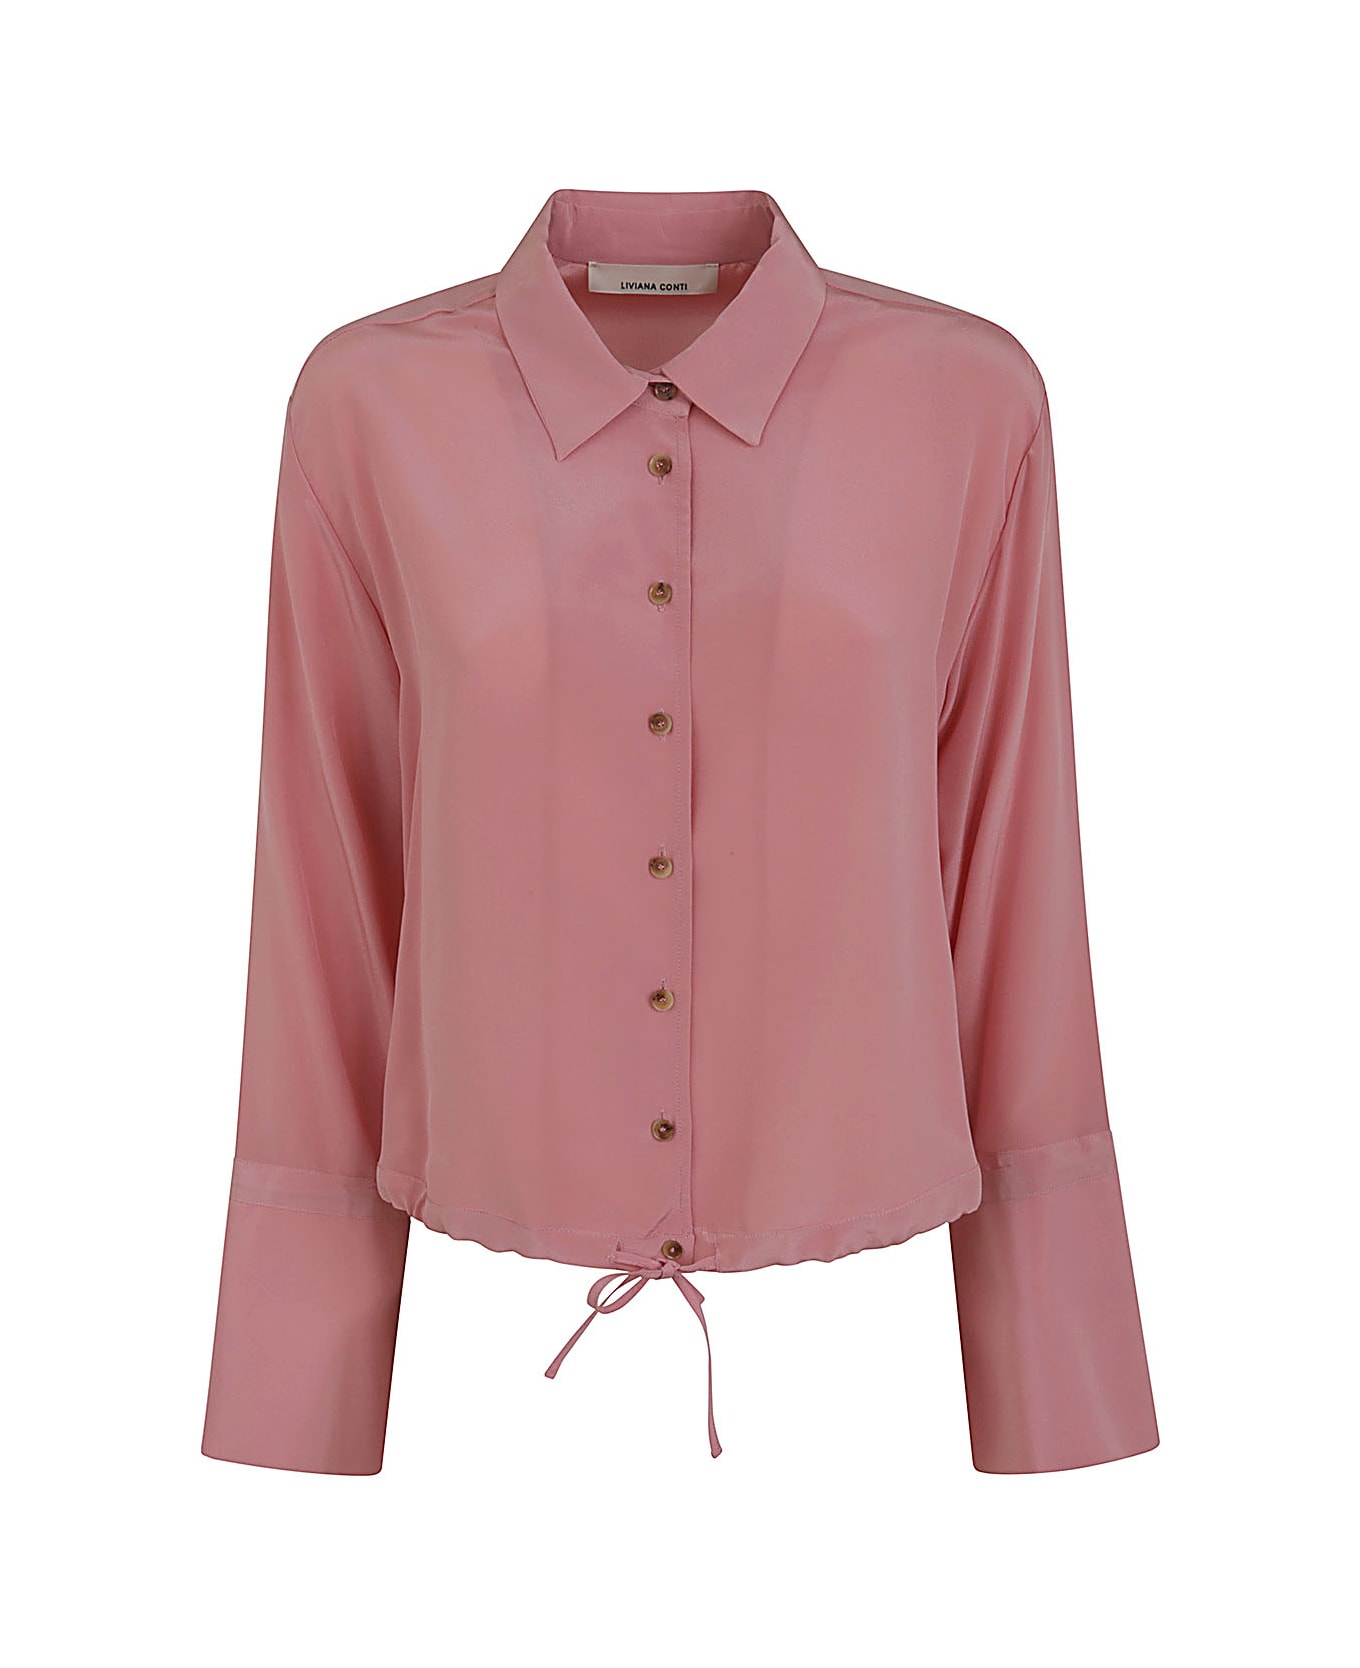 Liviana Conti Elastic Bottom Shirt - Ruby Pink